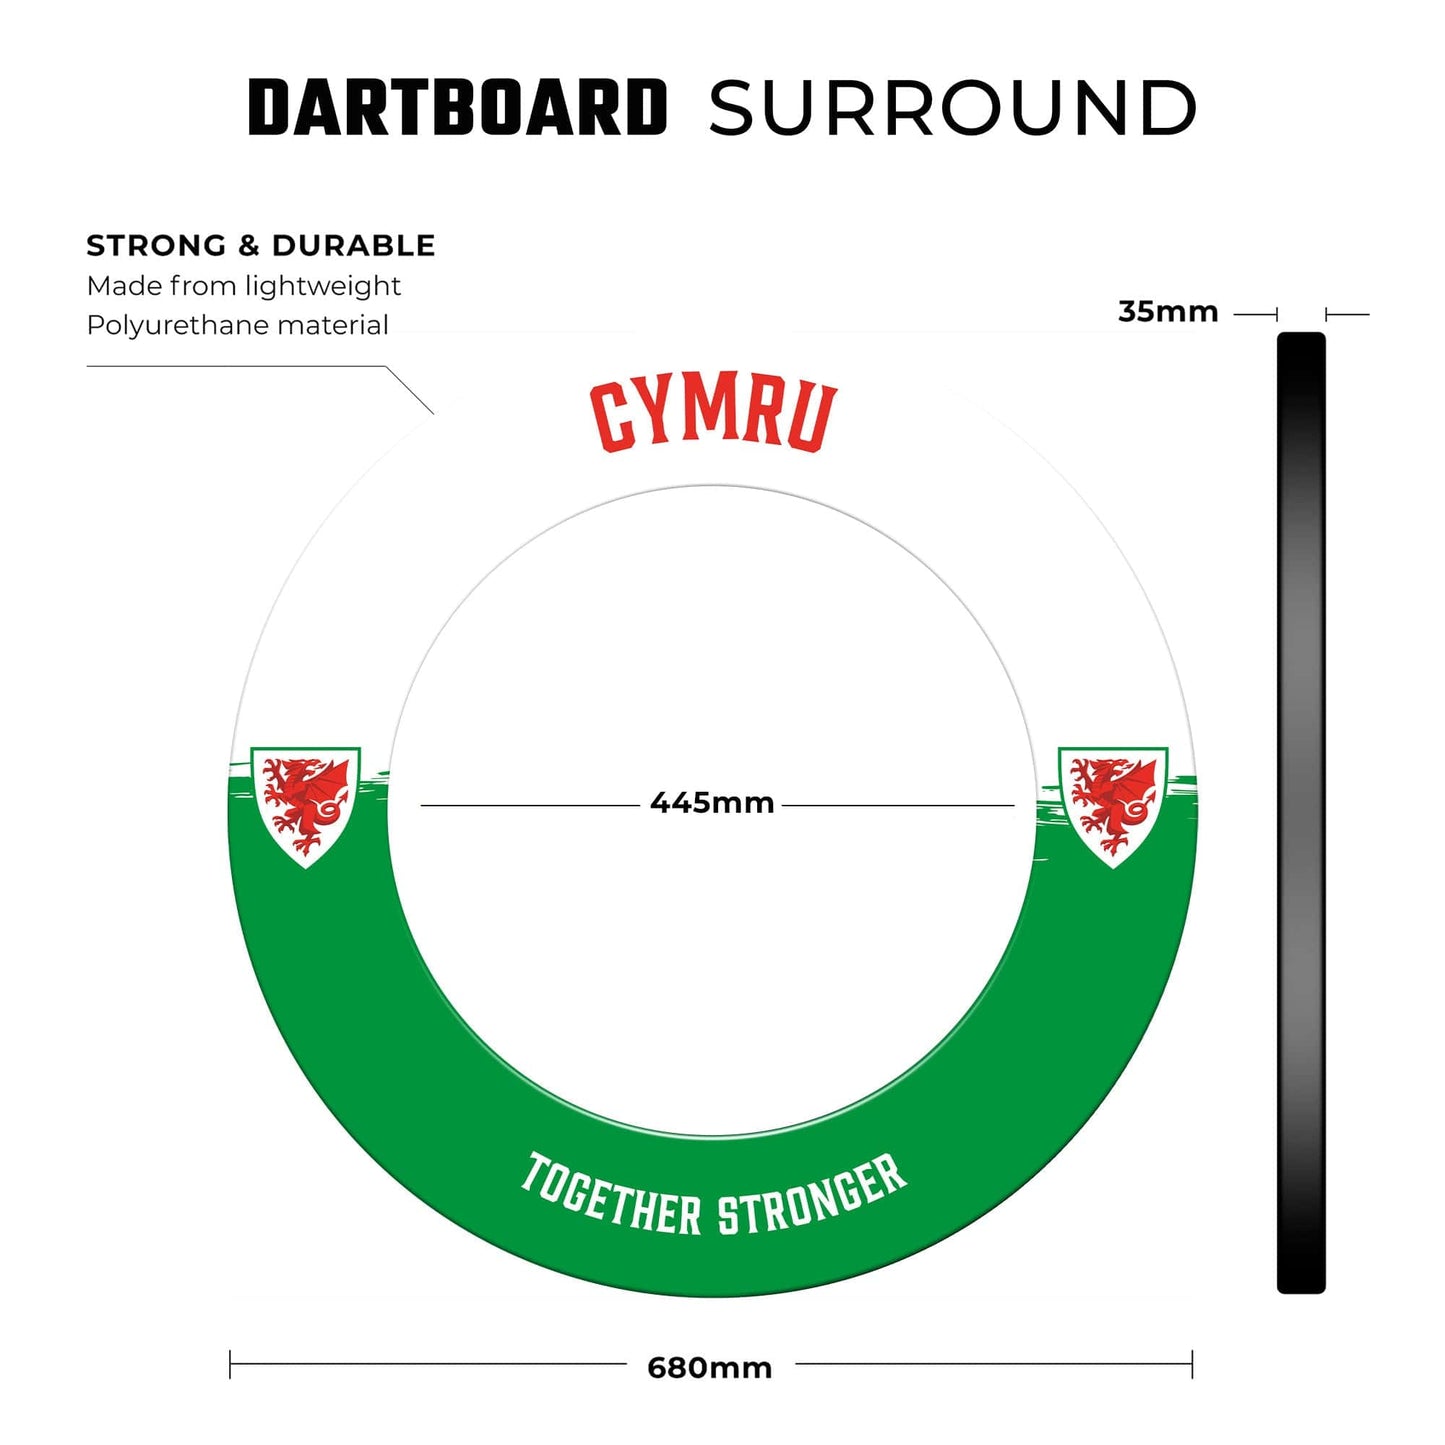 Wales Printed Dartboard & Printed Surround - Cymru